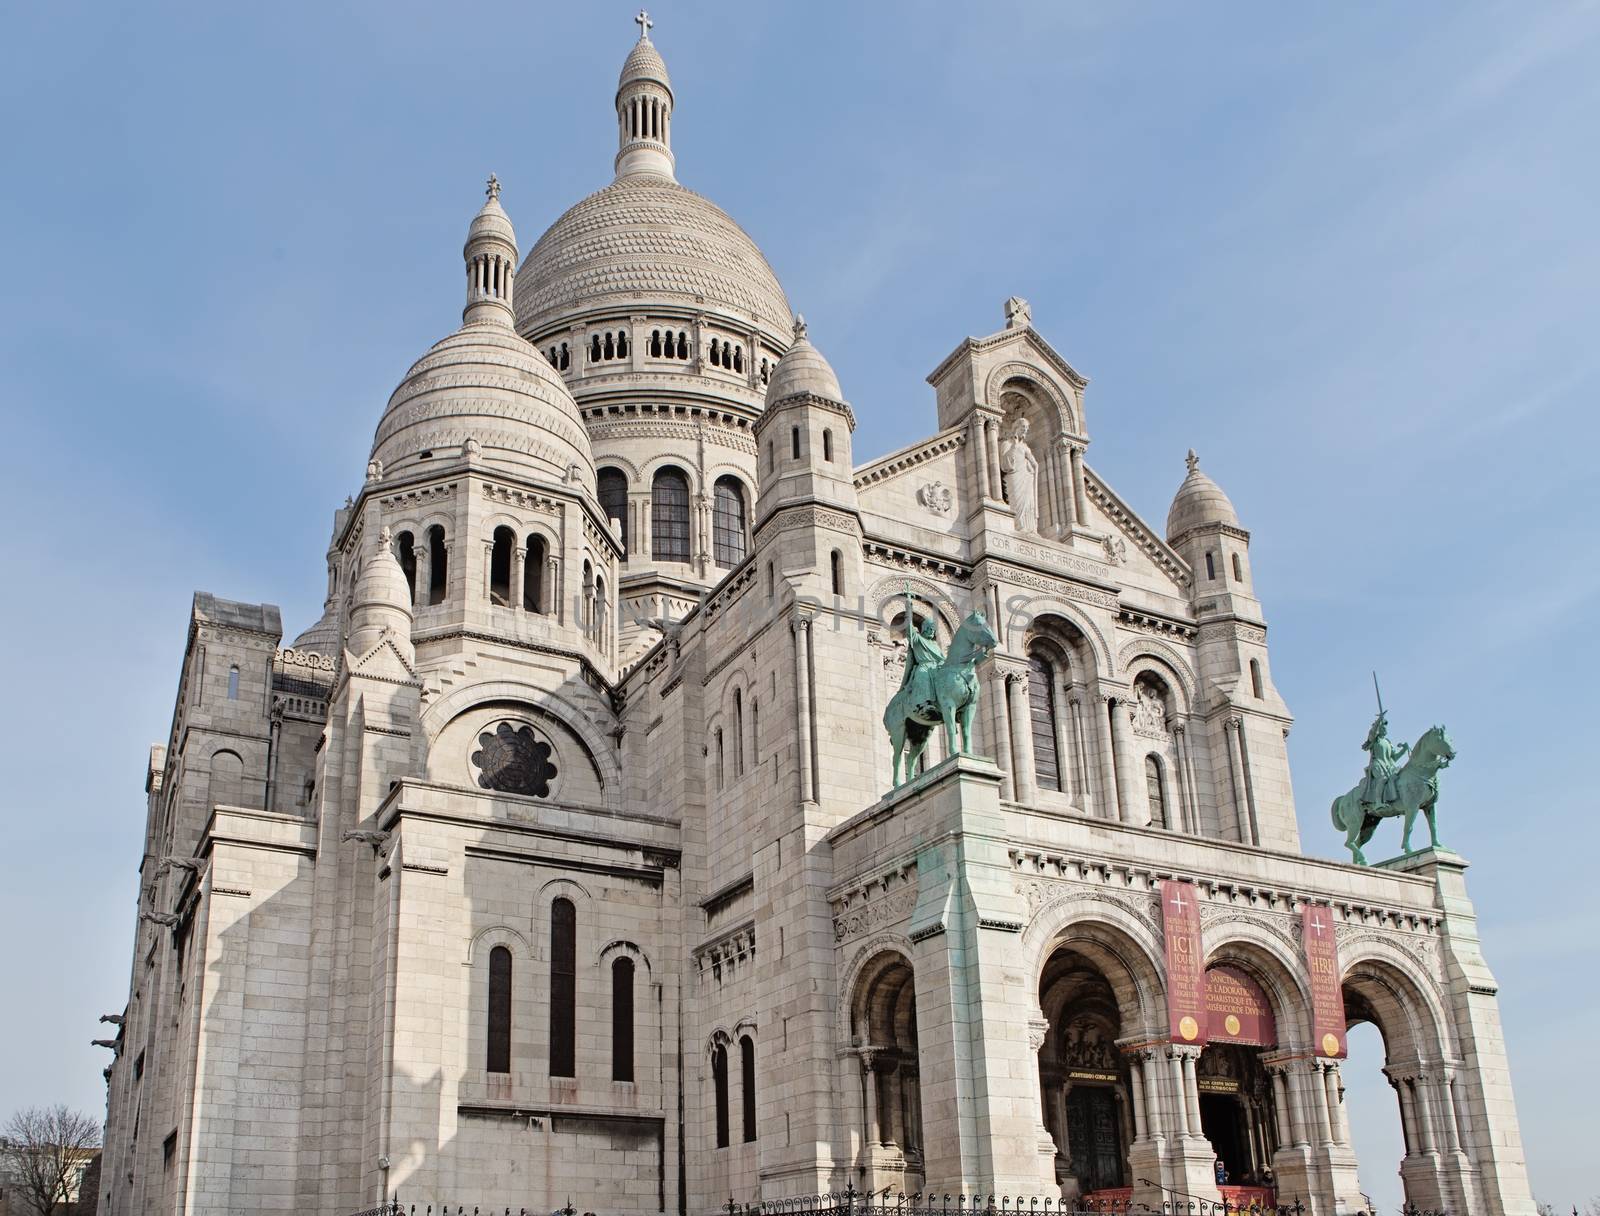 Sacre Coeur Basilica - popular landmark, highest city point in Paris